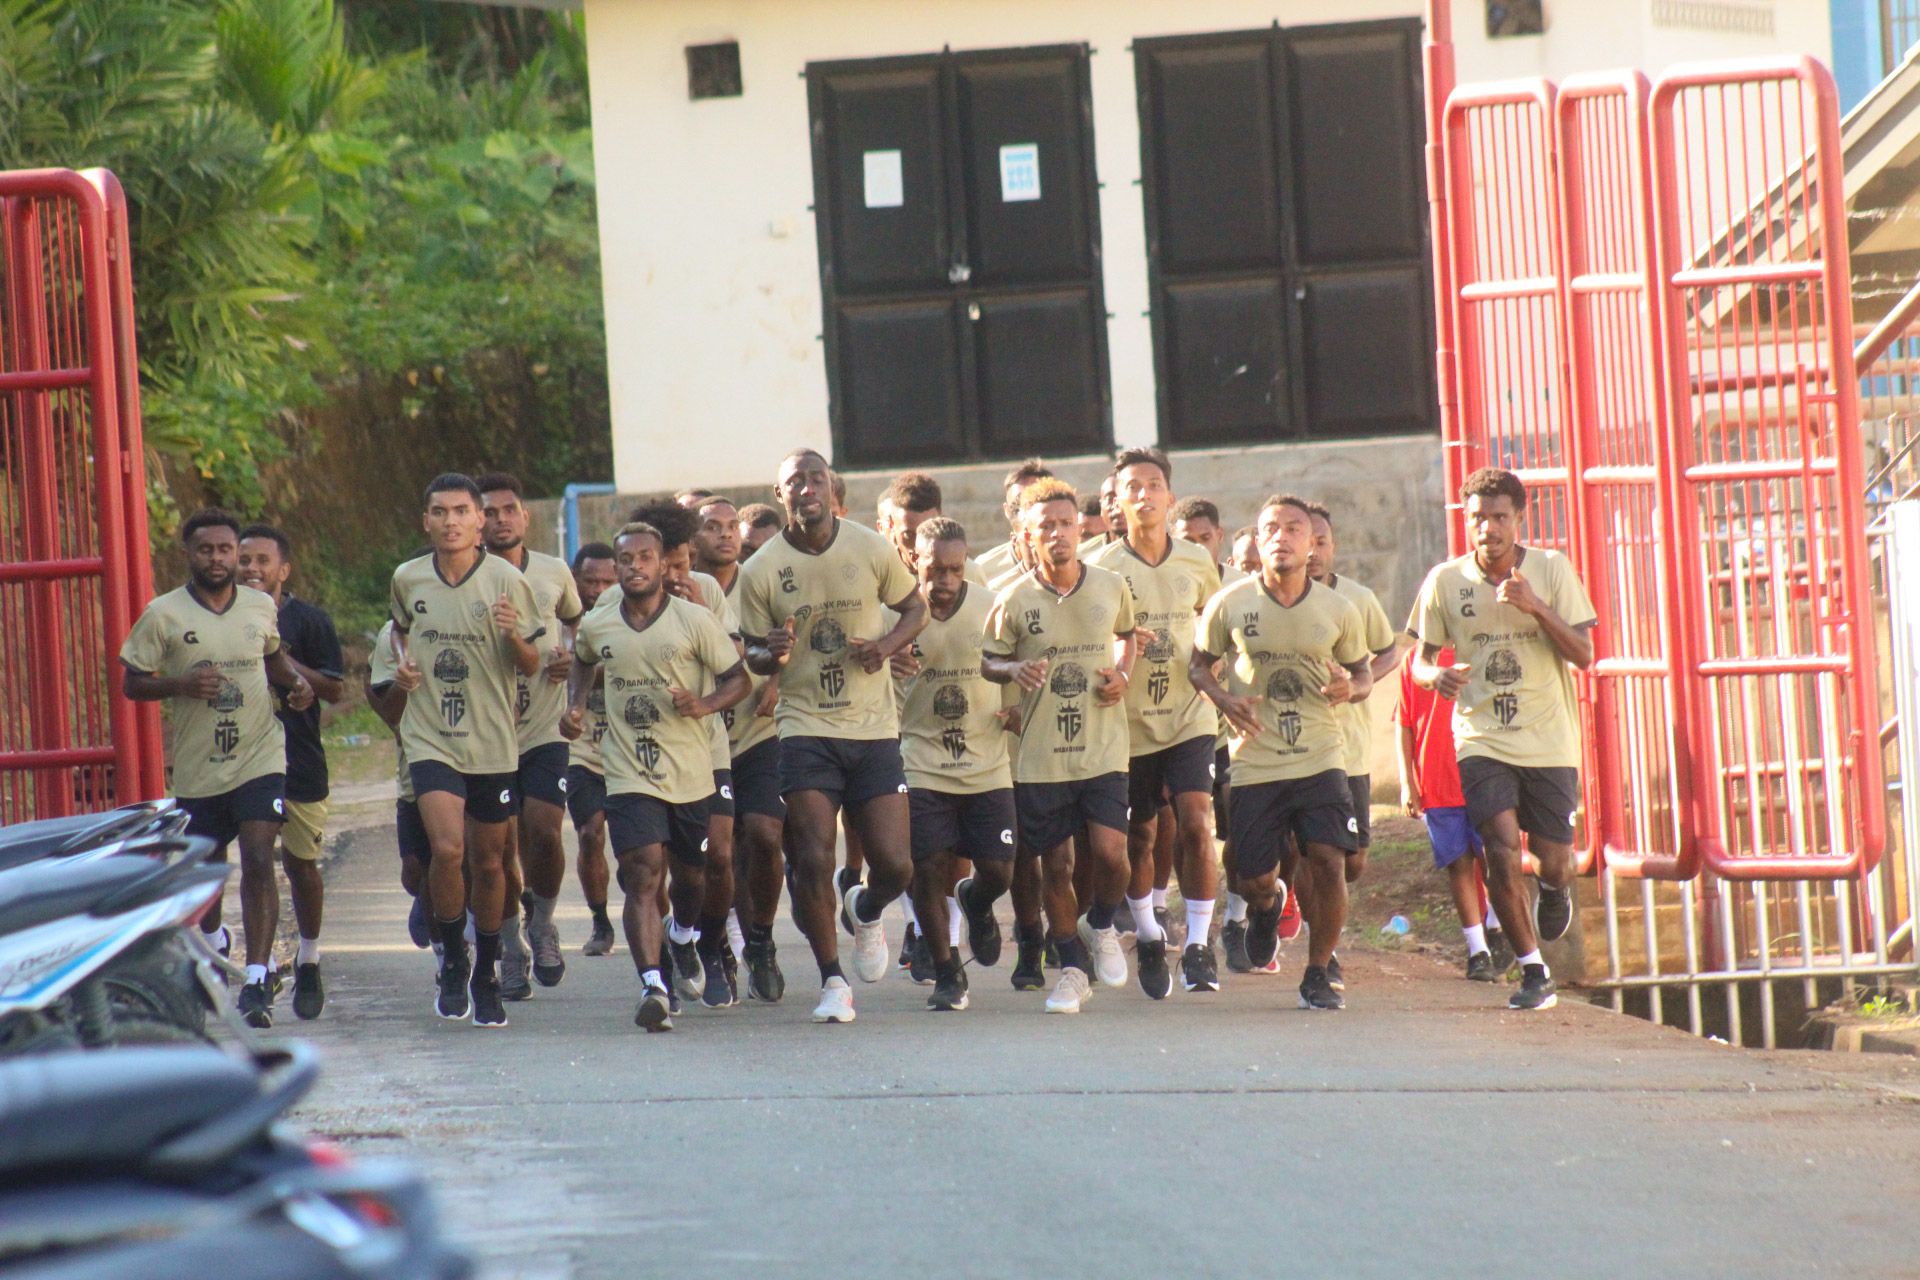 Tim Persewar Waropen ketika melakukan latihan (Joging) keliling luar Stadion Mandala Jayapura, Senin 15 Agustus 2022 dok (PORTAL PAPUA)